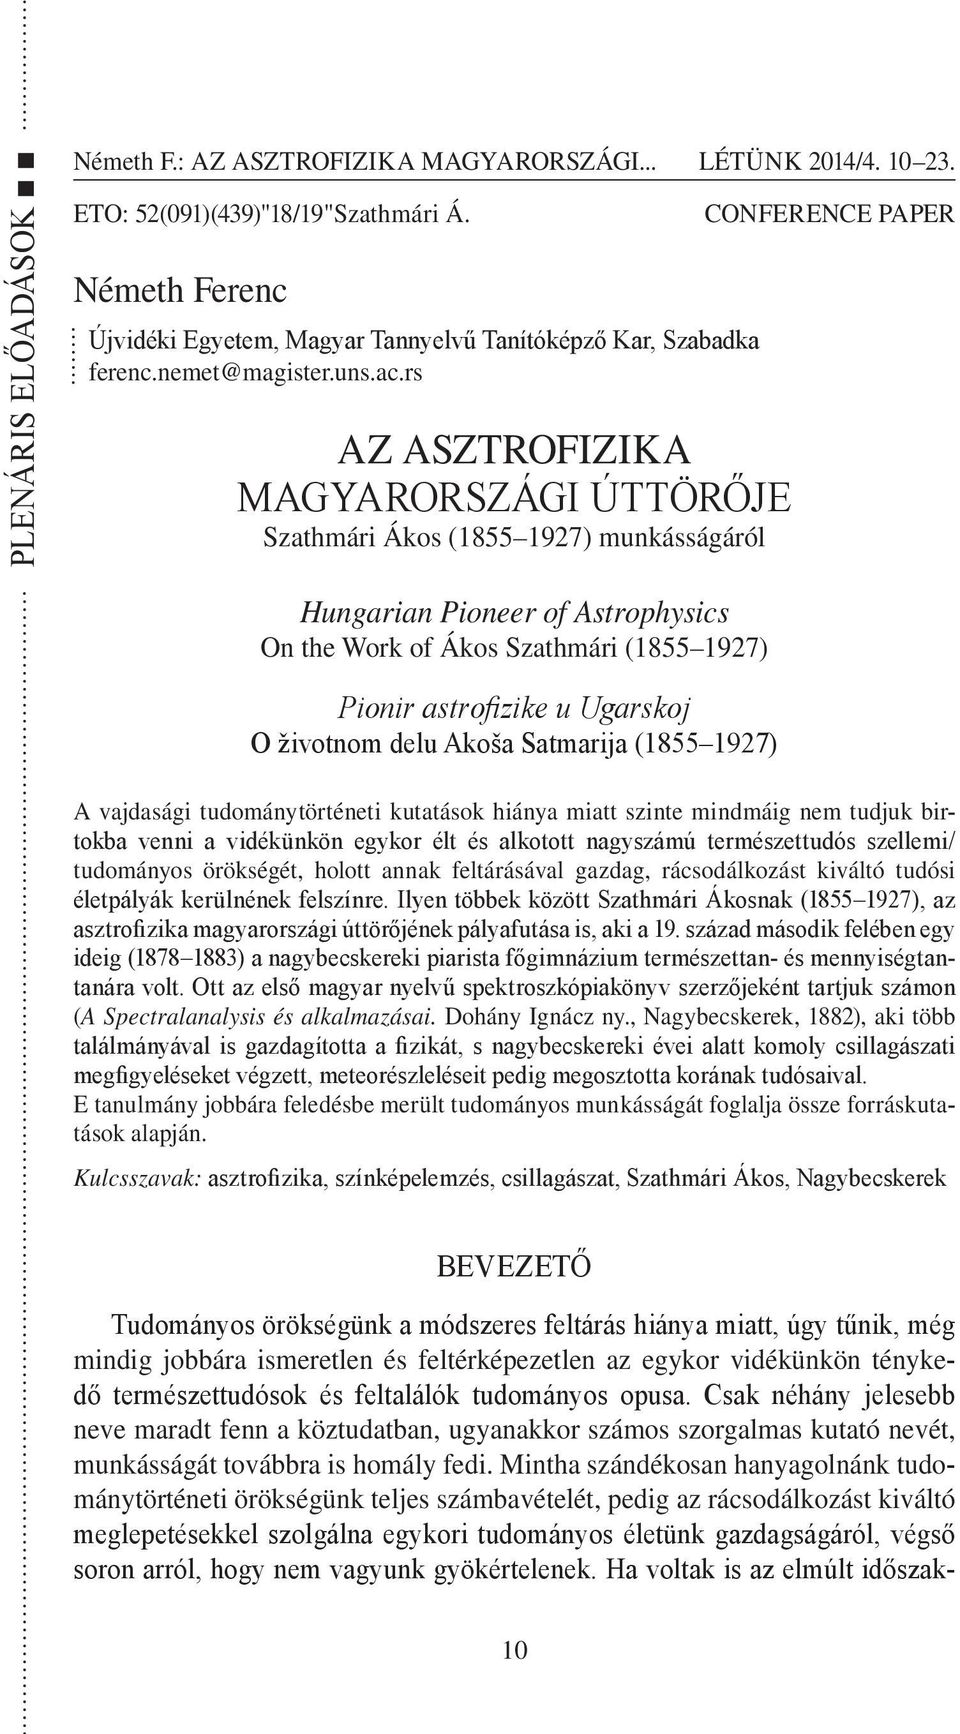 CONFERENCE PAPER Hungarian Pioneer of Astrophysics On the Work of Ákos Szathmári (1855 1927) Pionir astrofizike u Ugarskoj O životnom delu Akoša Satmarija (1855 1927) A vajdasági tudománytörténeti